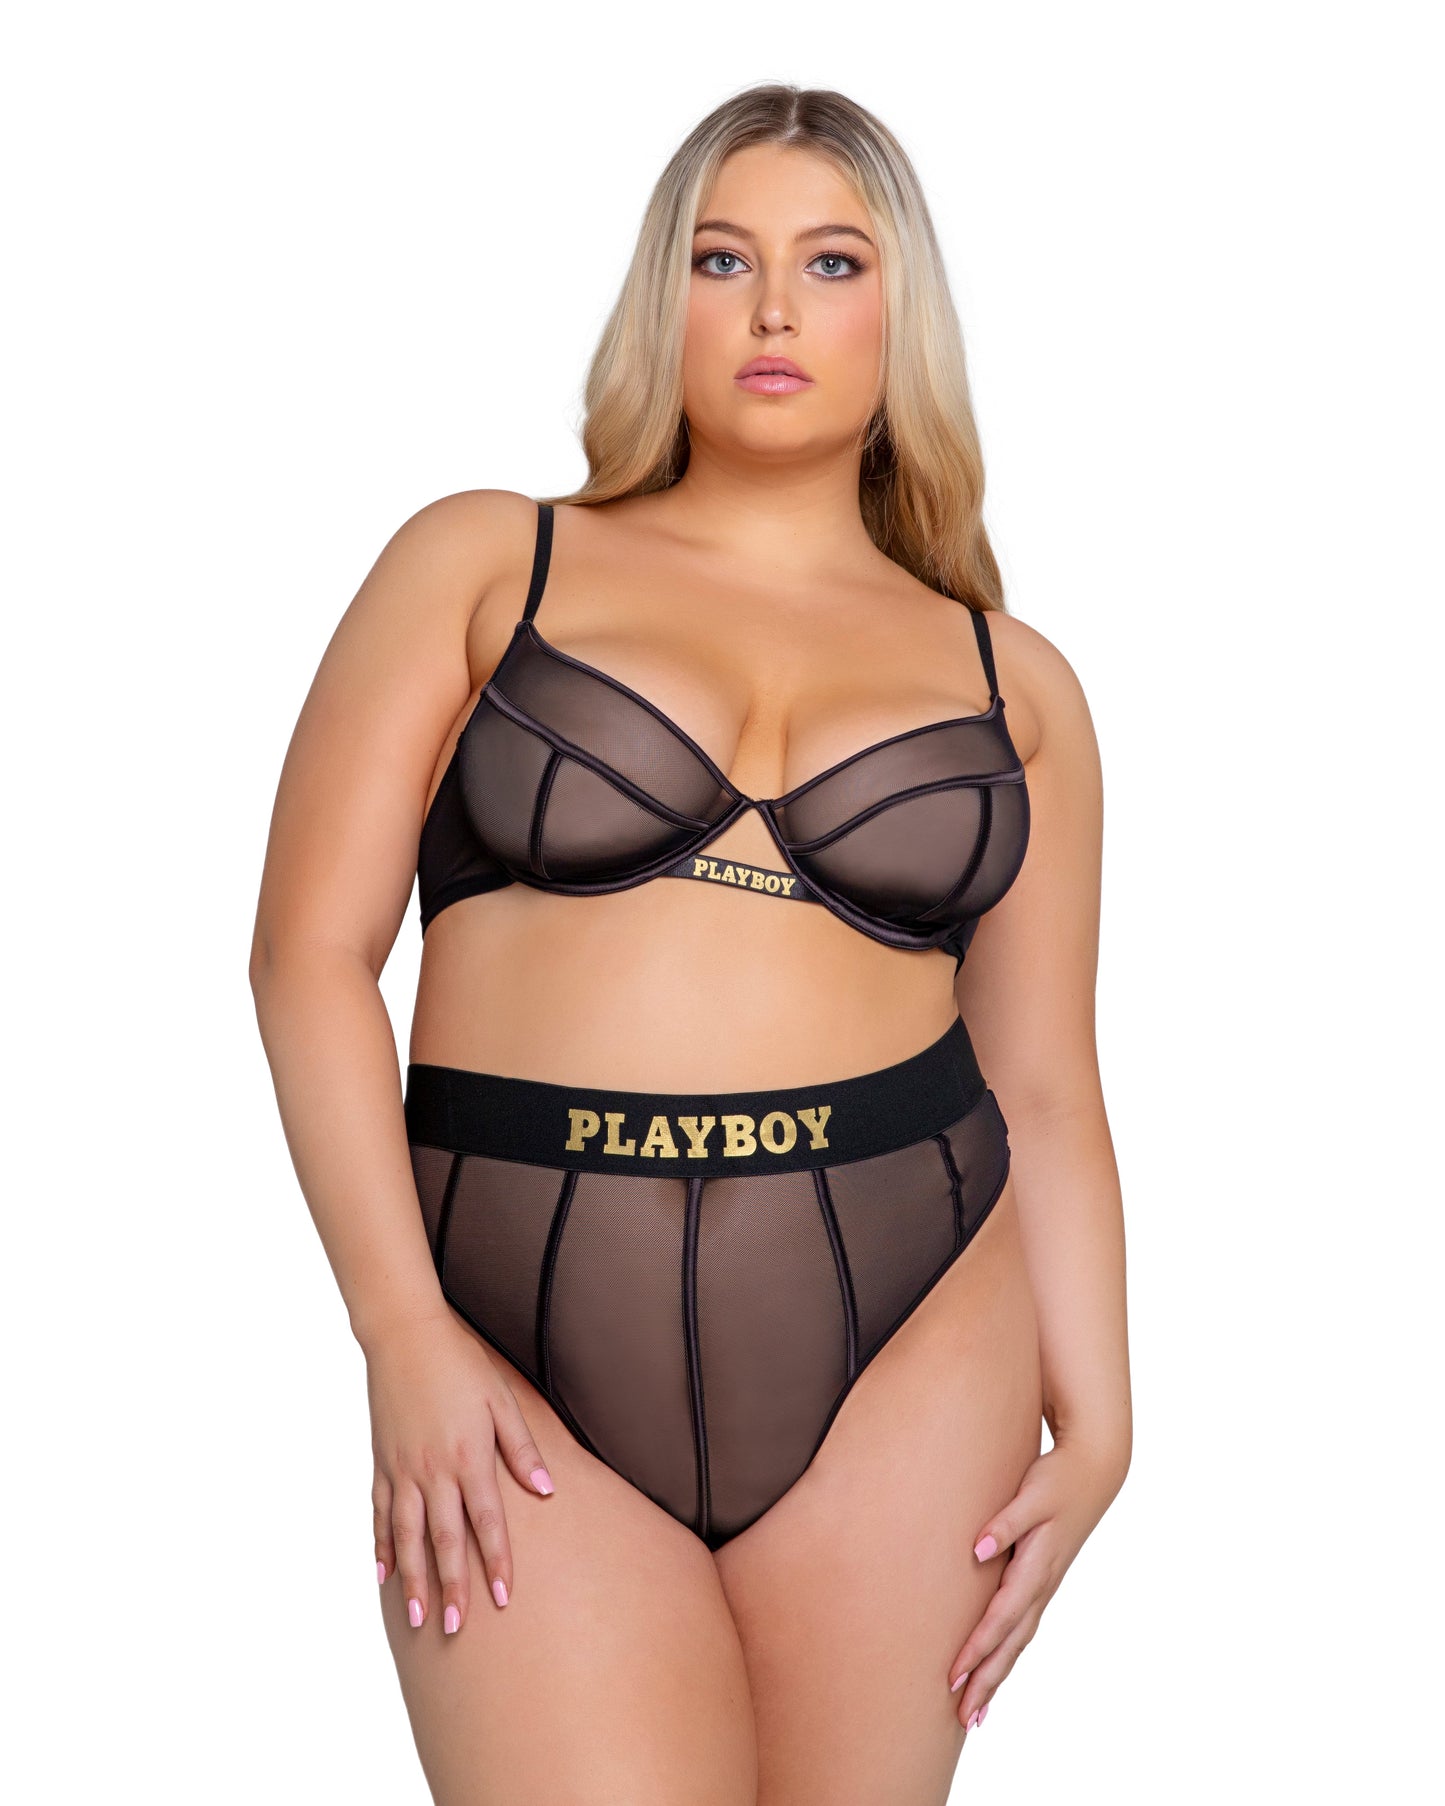 Roma Confidential Playboy Cage Bra Set Black/Gold Queen Plus Size